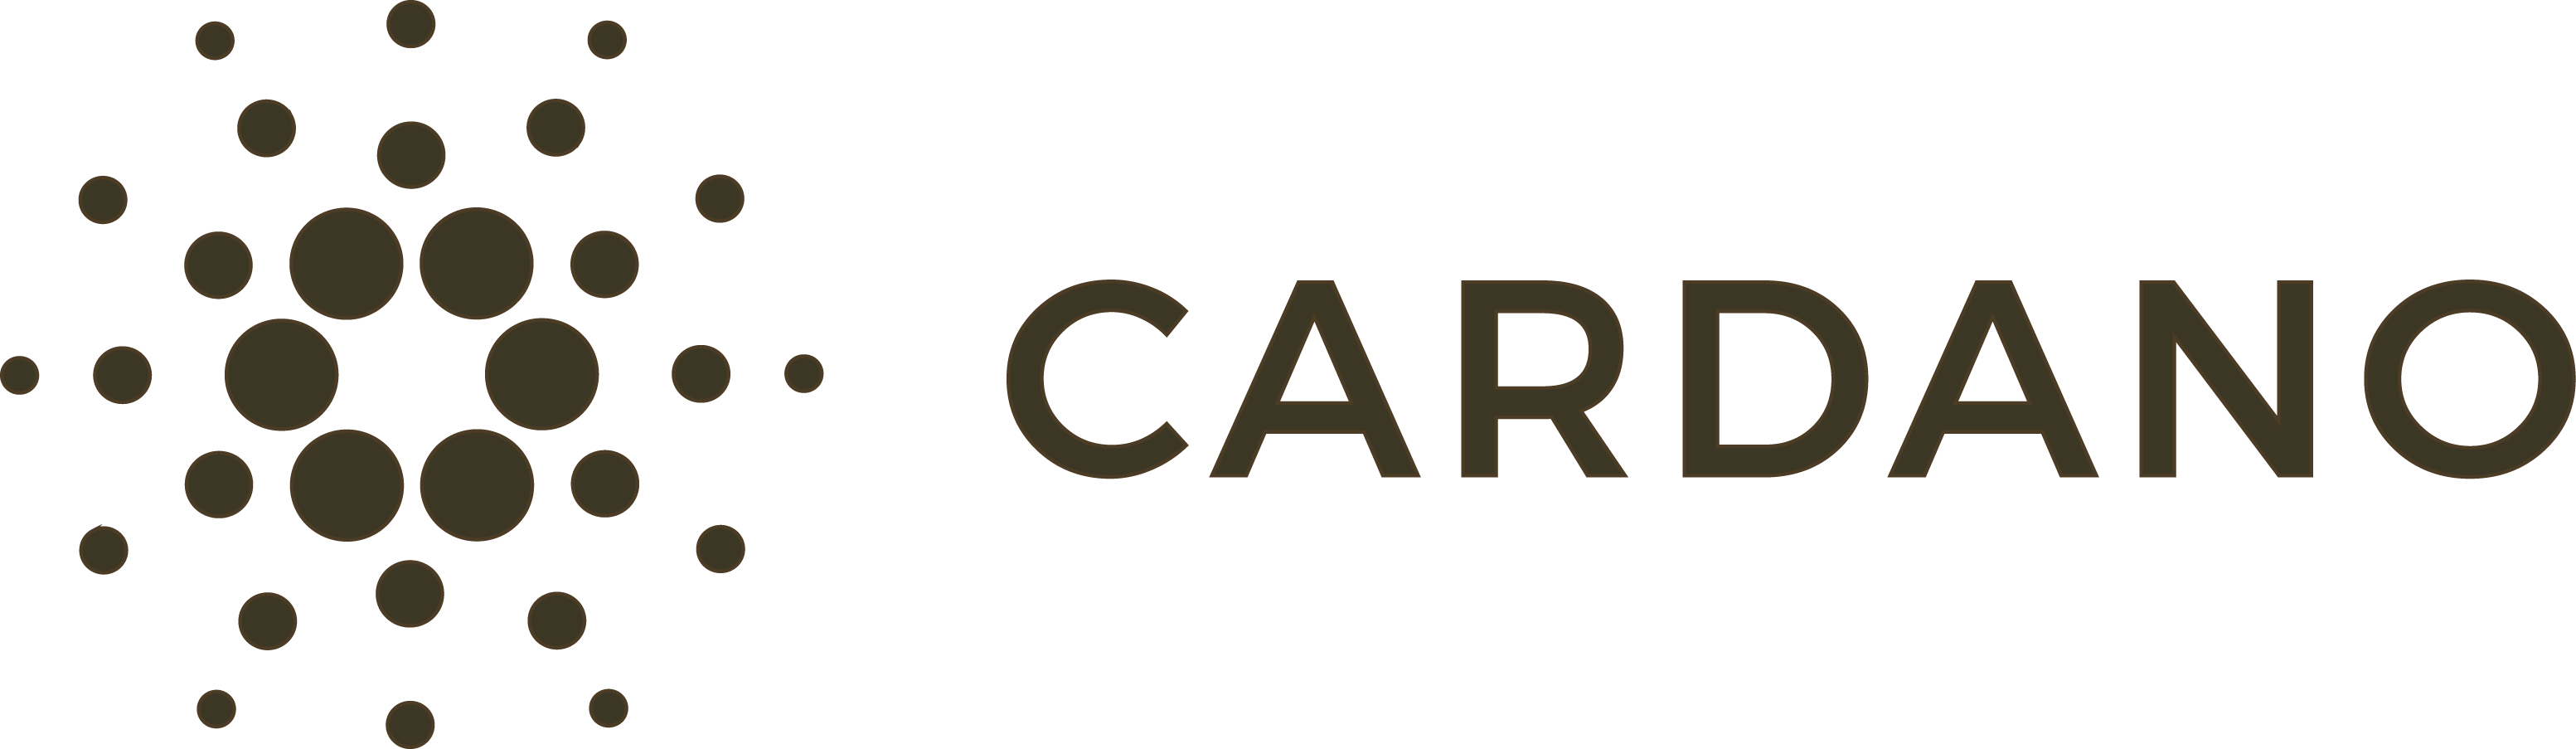 cardano-logo.png